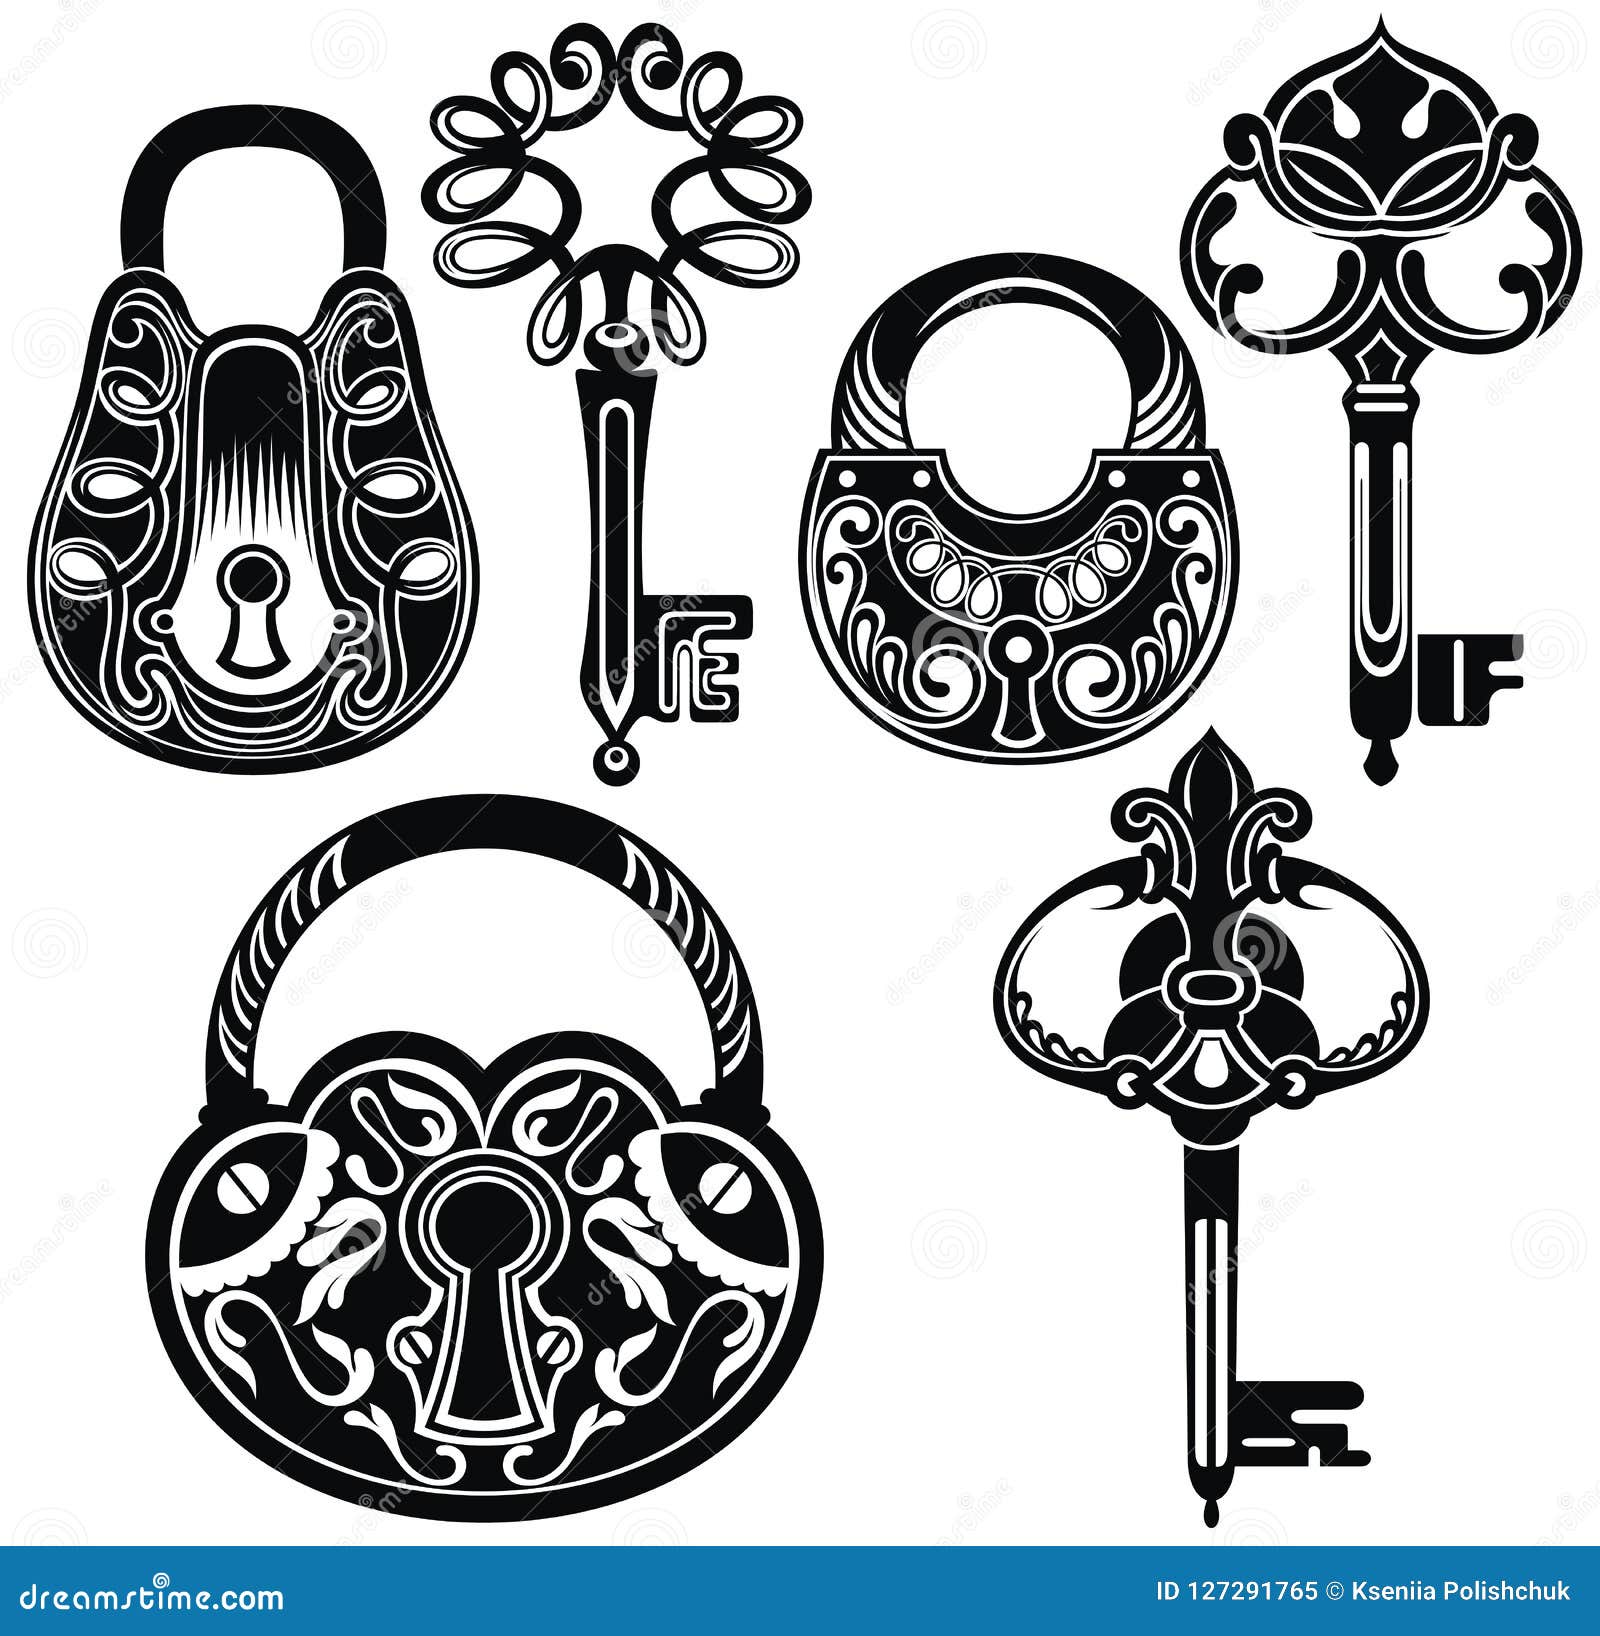 Vintage Keys With Intricate Bits And Ornate Bows  Key tattoo designs Key  tattoo Skeleton key tattoo